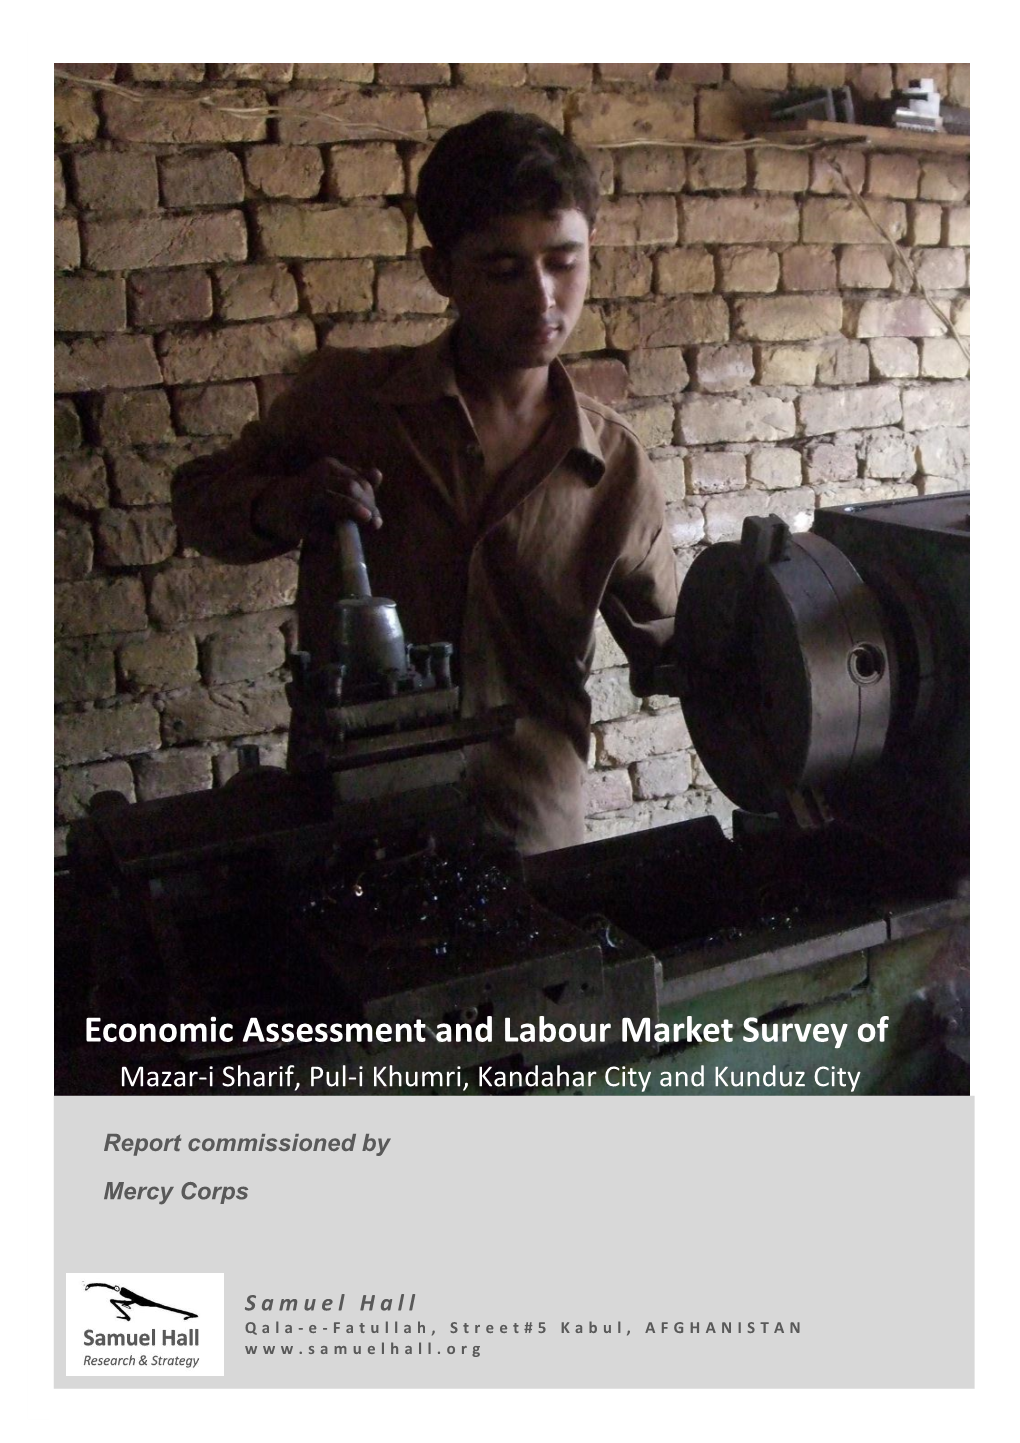 Economic Assessment and Labour Market Survey of Mazar-I Sharif, Pul-I Khumri, Kandahar City and Kunduz City